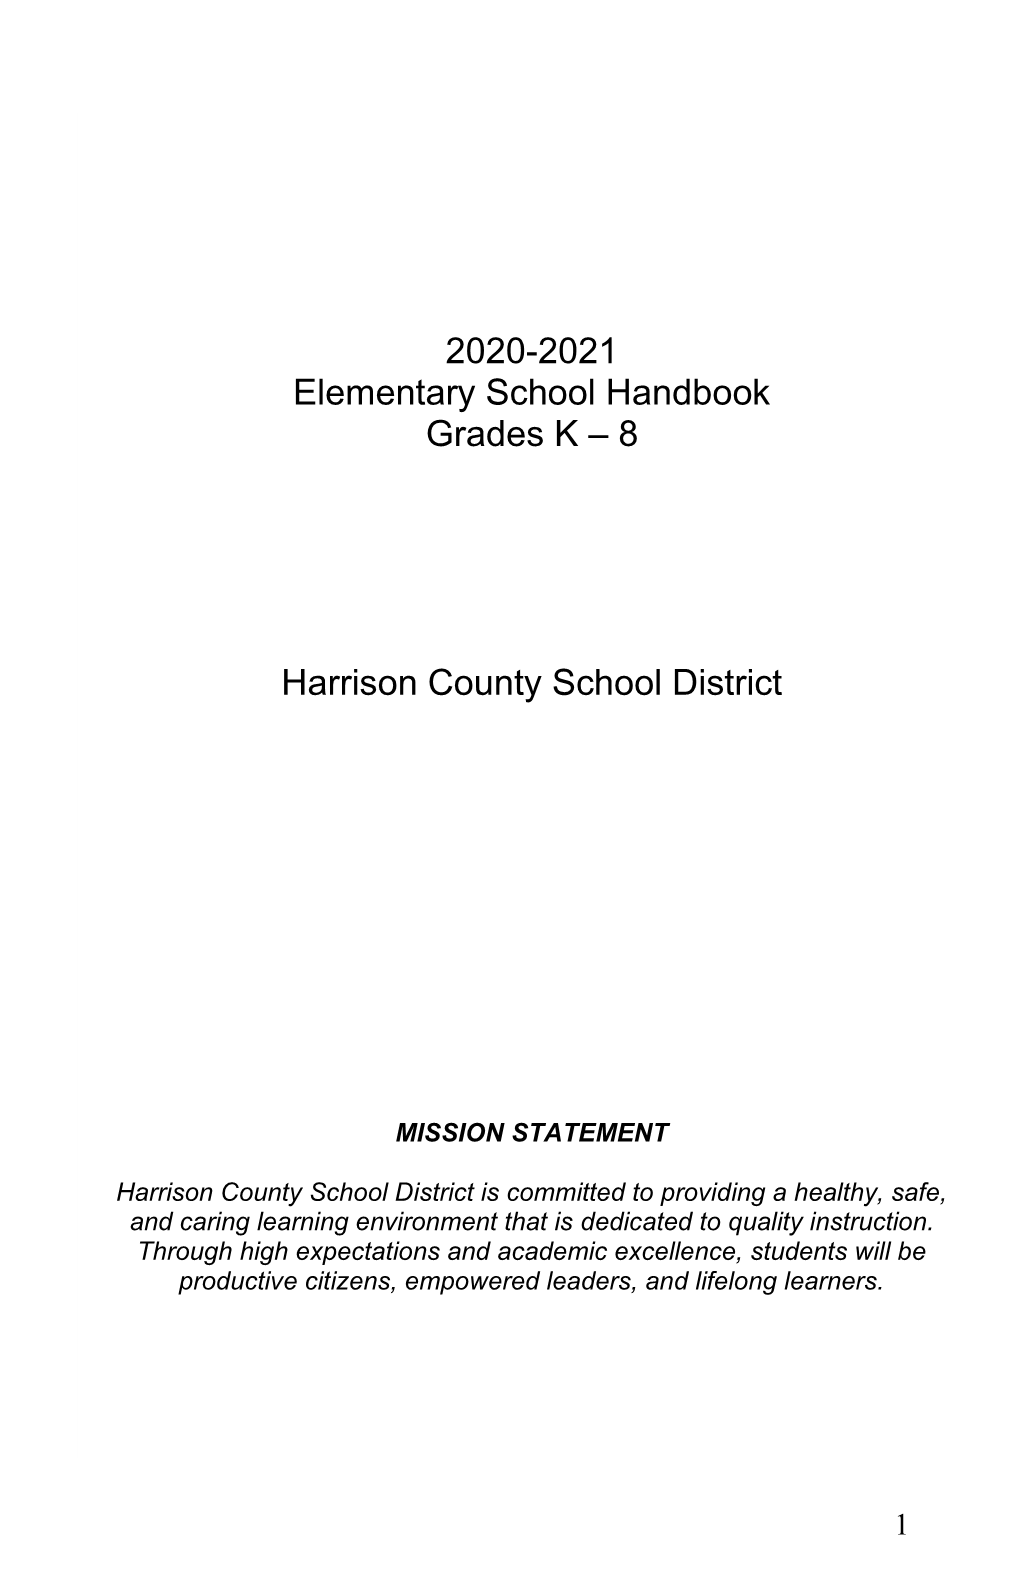 2020-2021 Elementary School Handbook Grades K – 8 Harrison